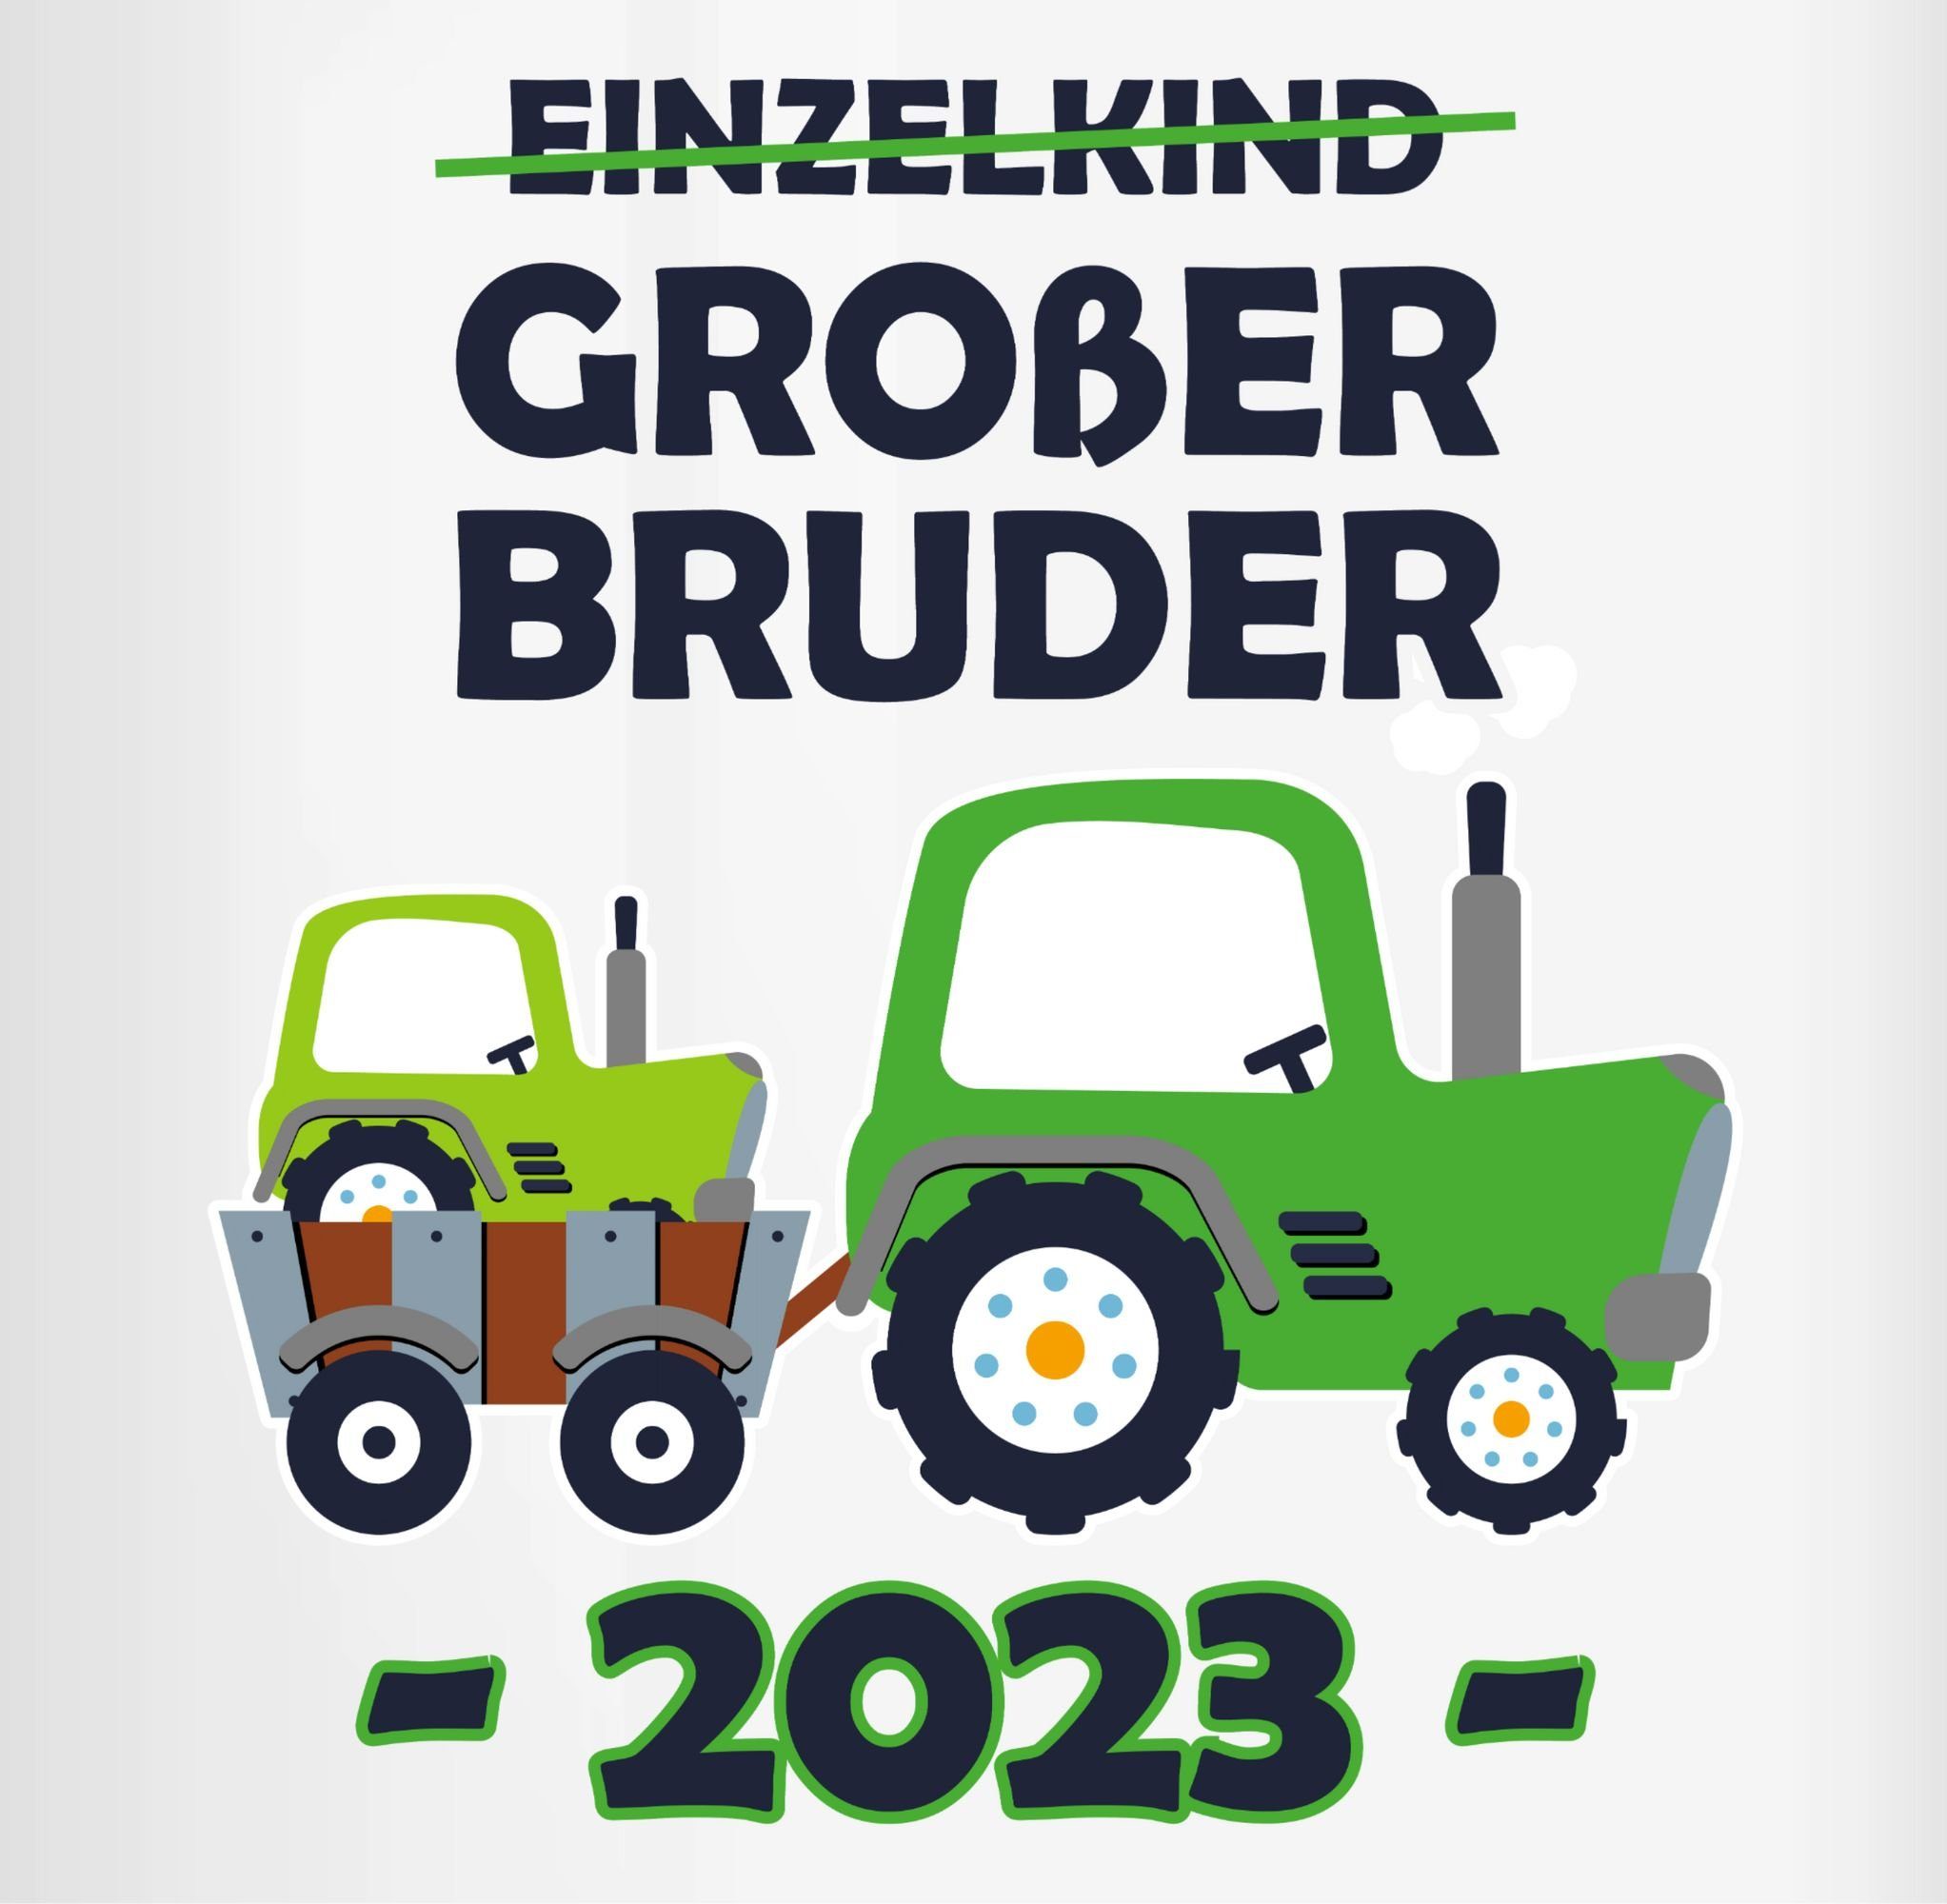 Shirtracer Tasse Keramik, Bruder Einzelkind Dunkelblau 1 Bruder 2023 Traktor, Großer Großer